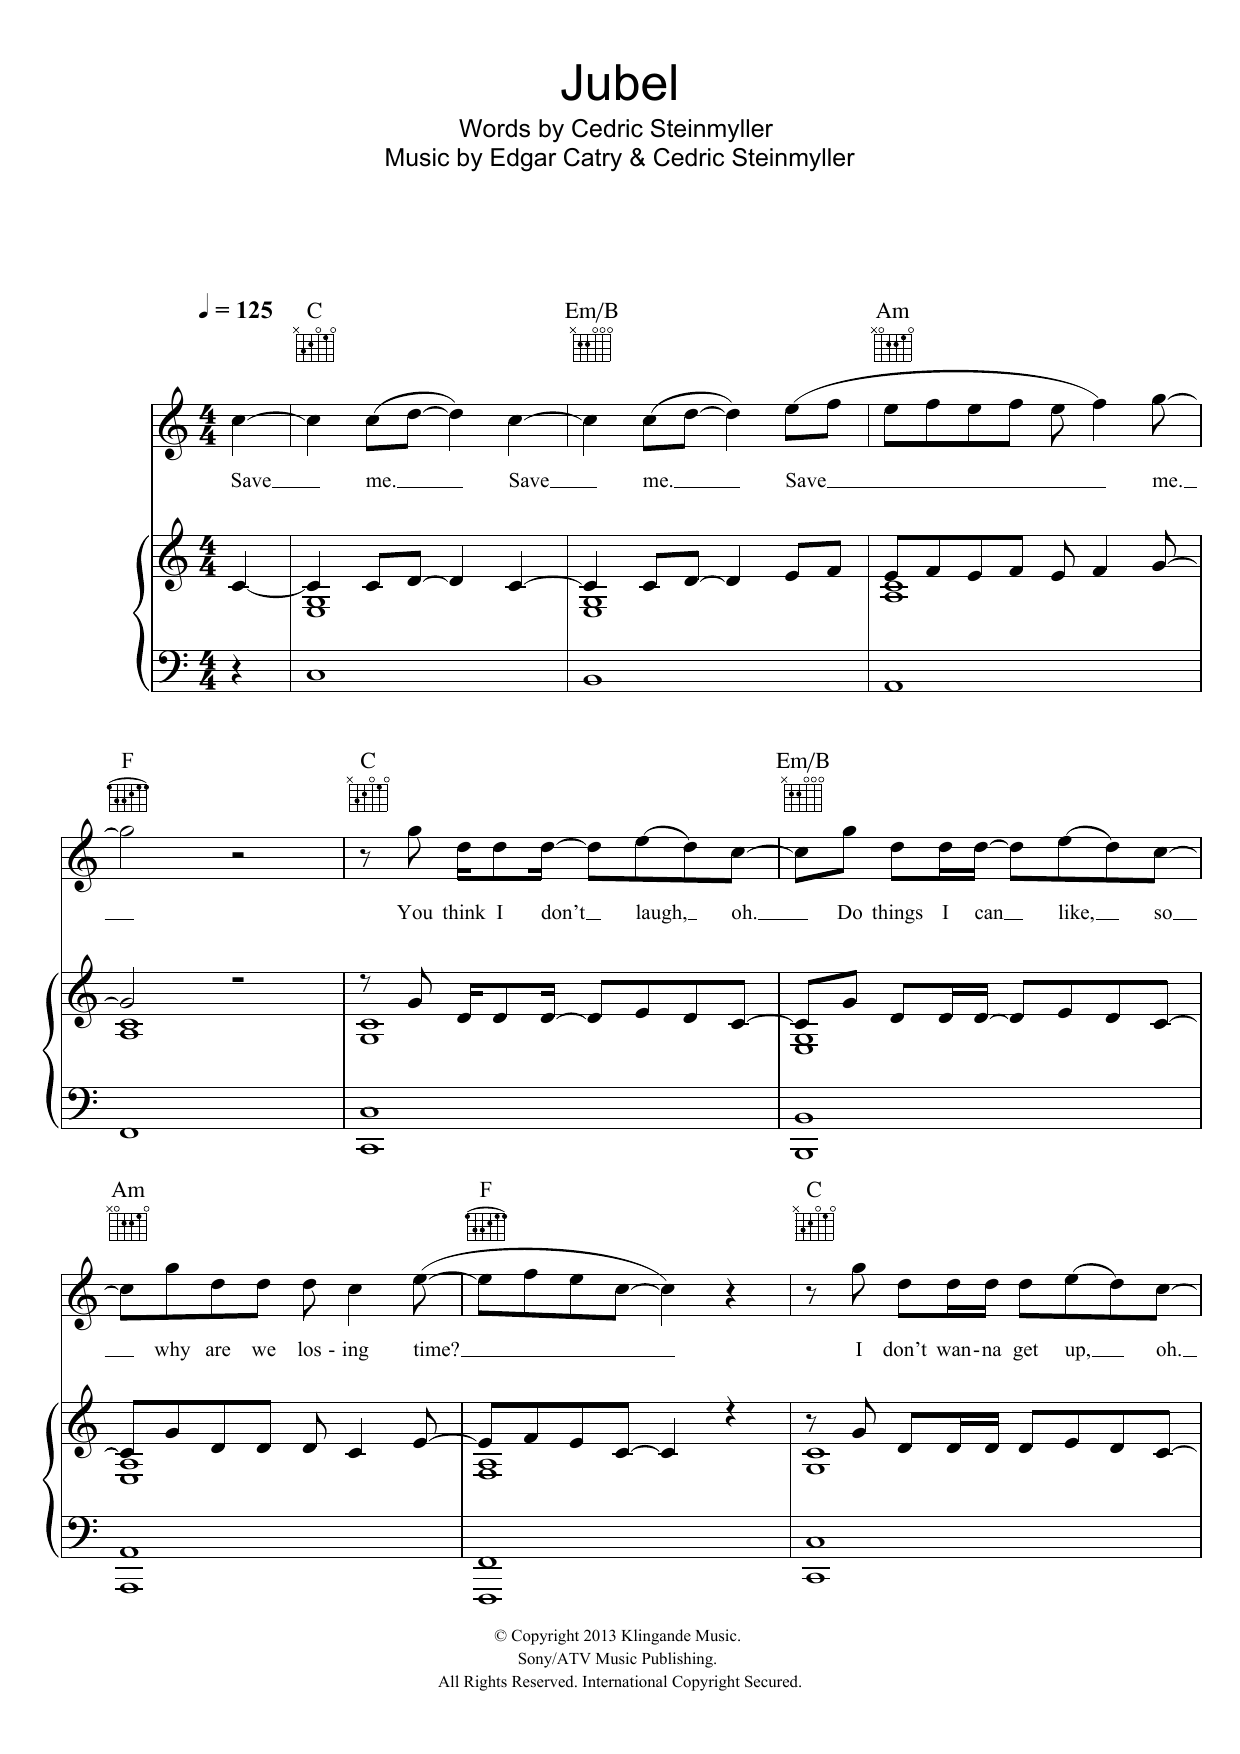 Klingande Jubel Sheet Music Notes & Chords for Piano, Vocal & Guitar (Right-Hand Melody) - Download or Print PDF